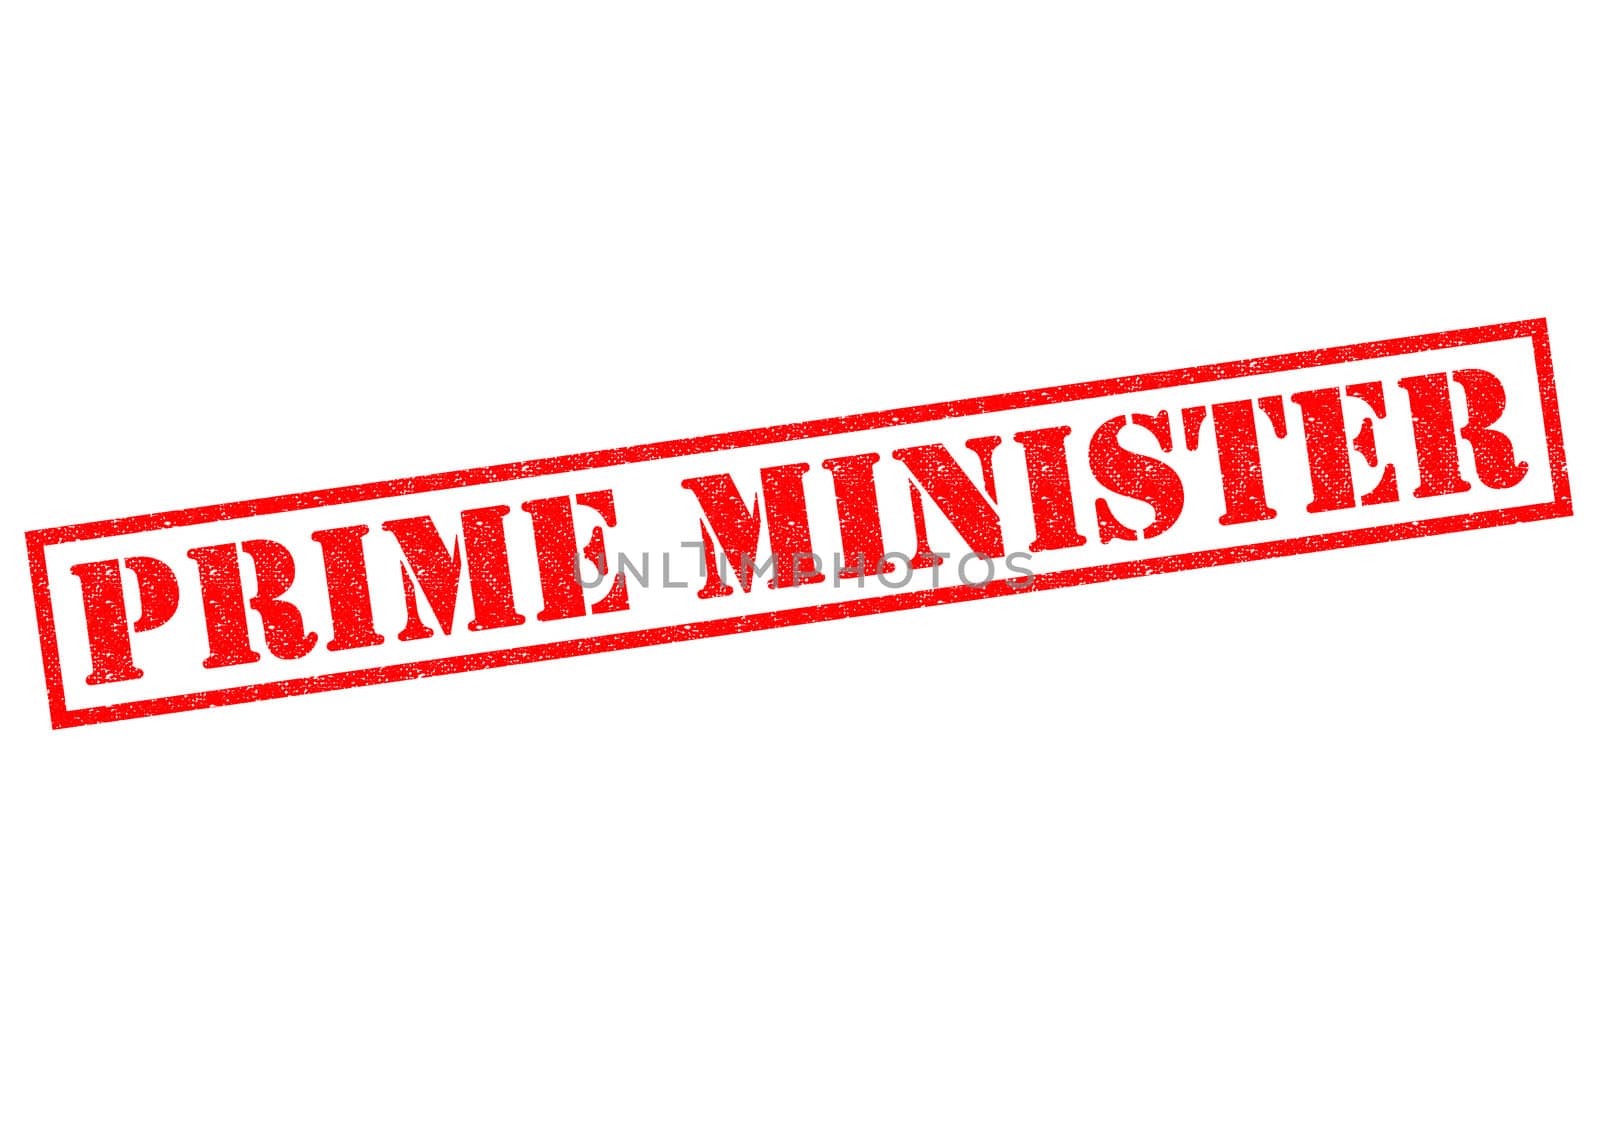 PRIME MINISTER by chrisdorney